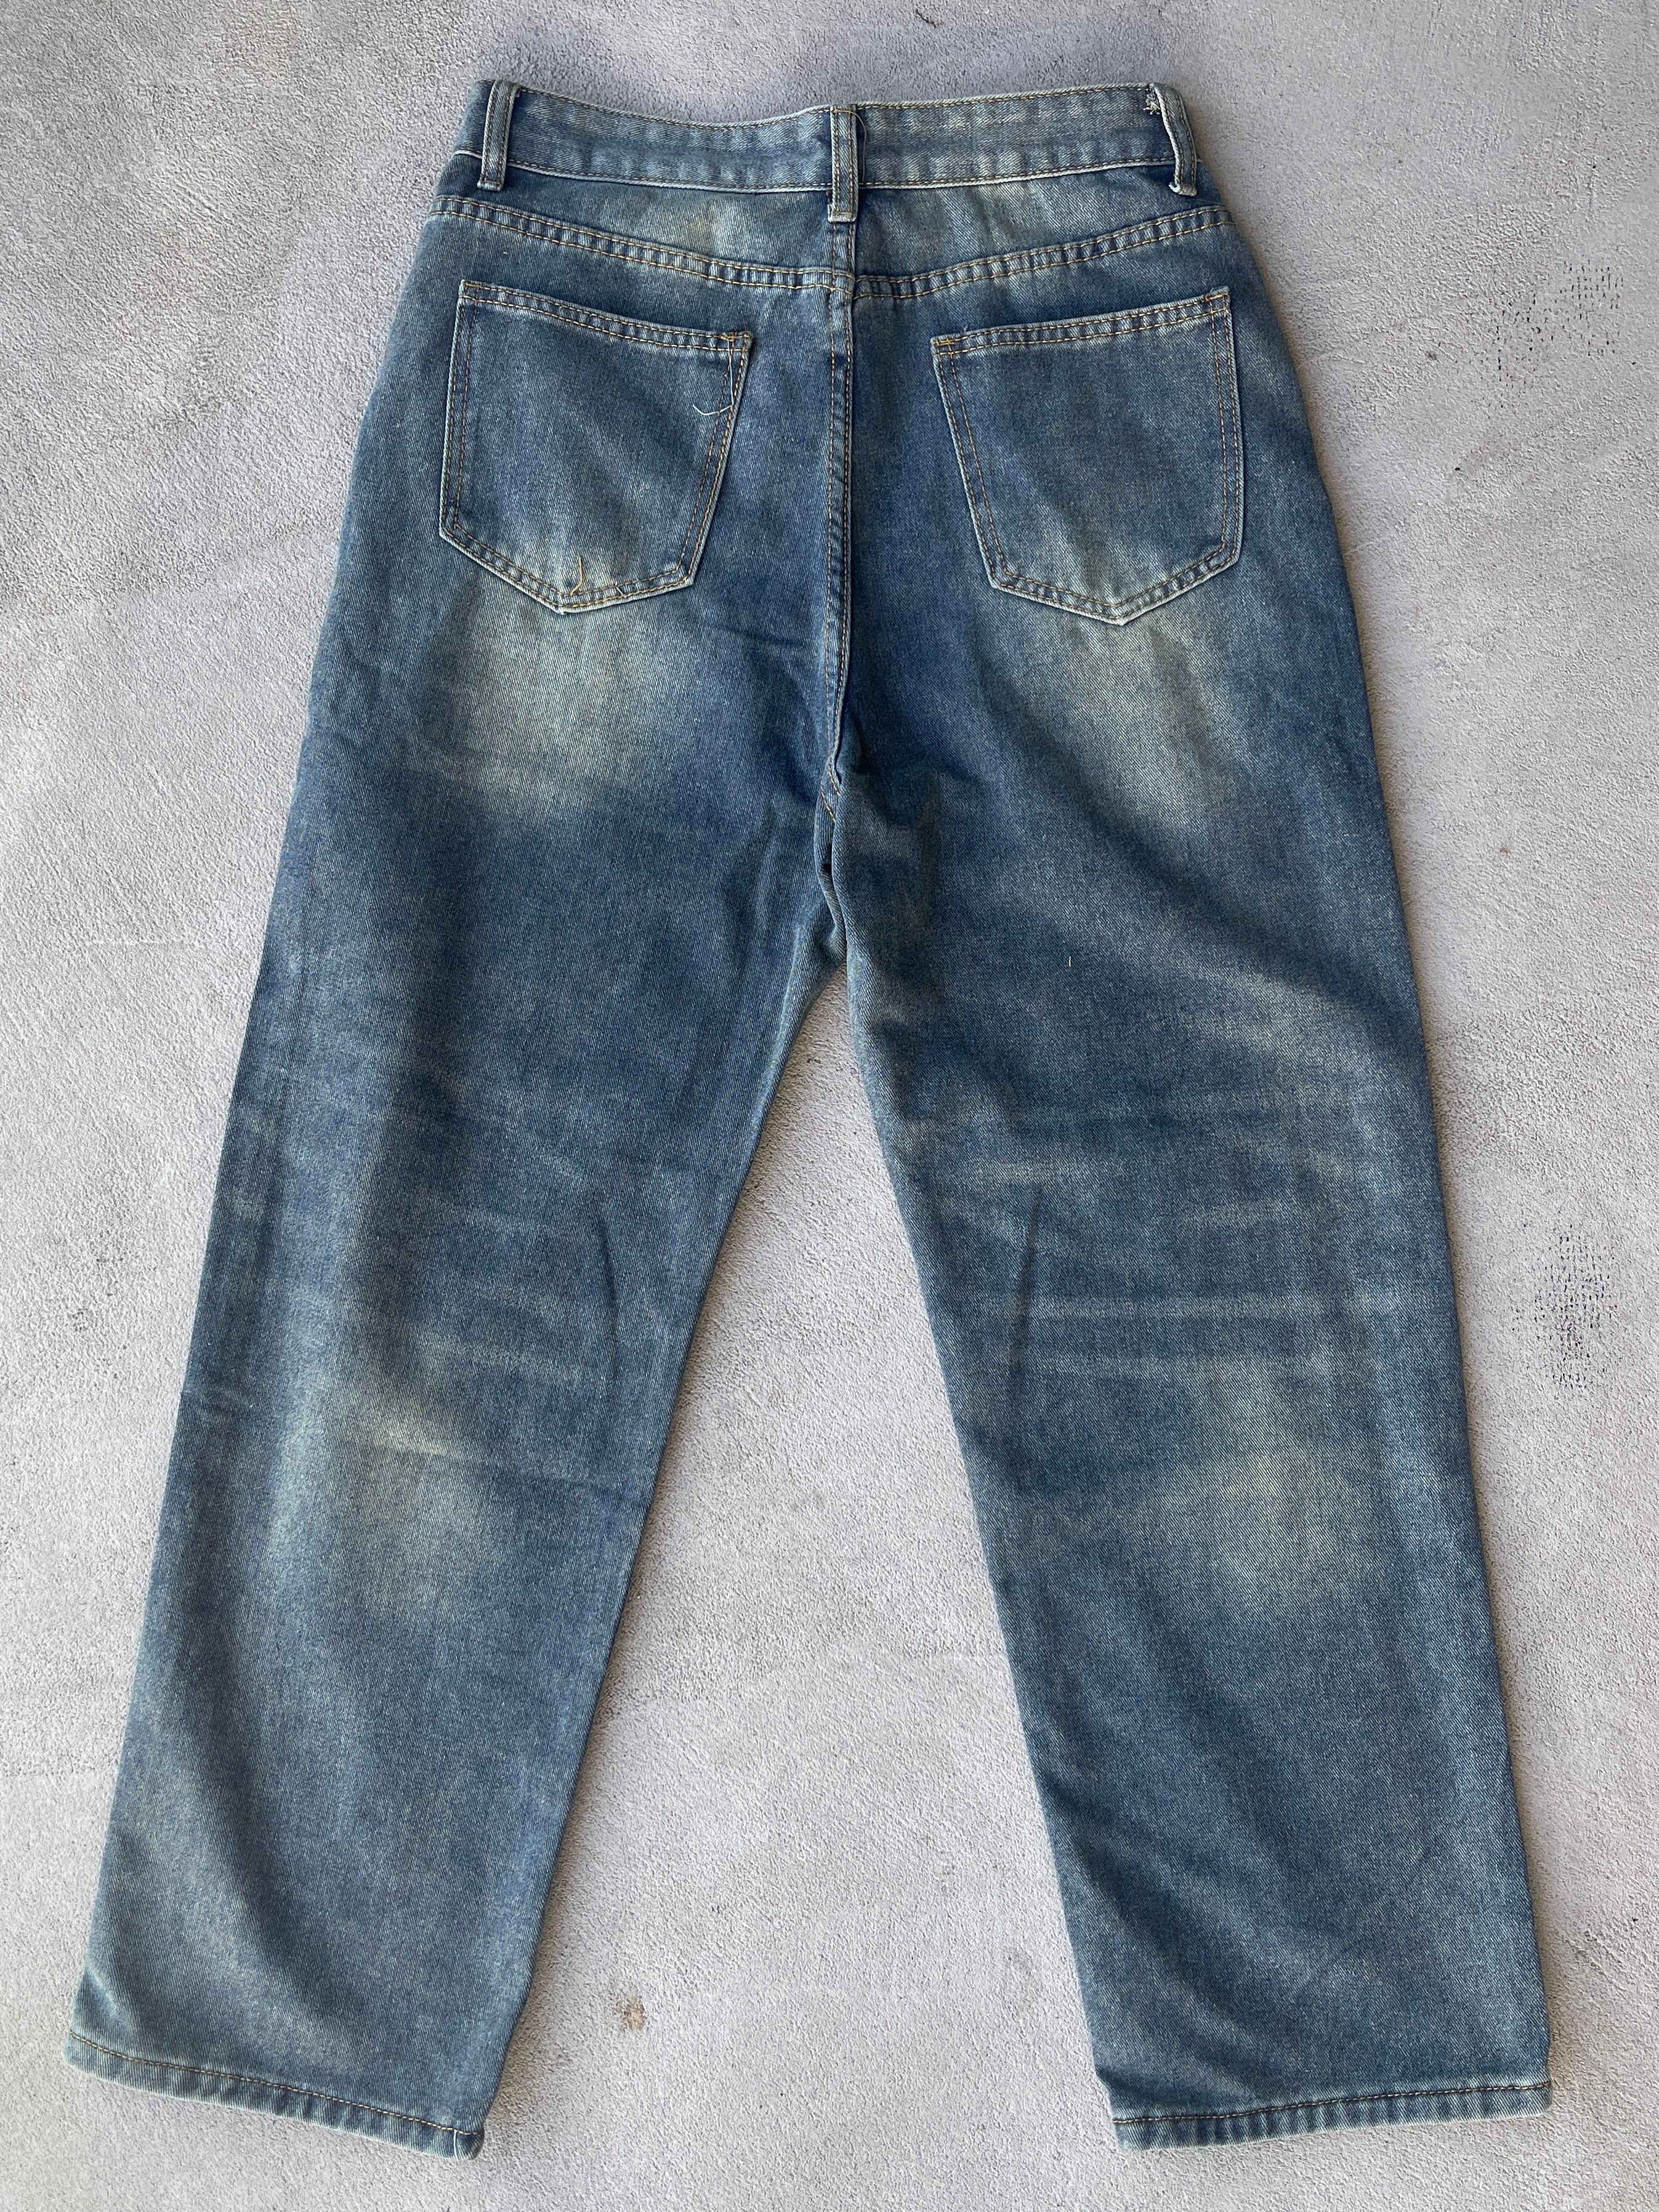 Vintage 2000s Japanese Americana Worker Denim Jeans - 5